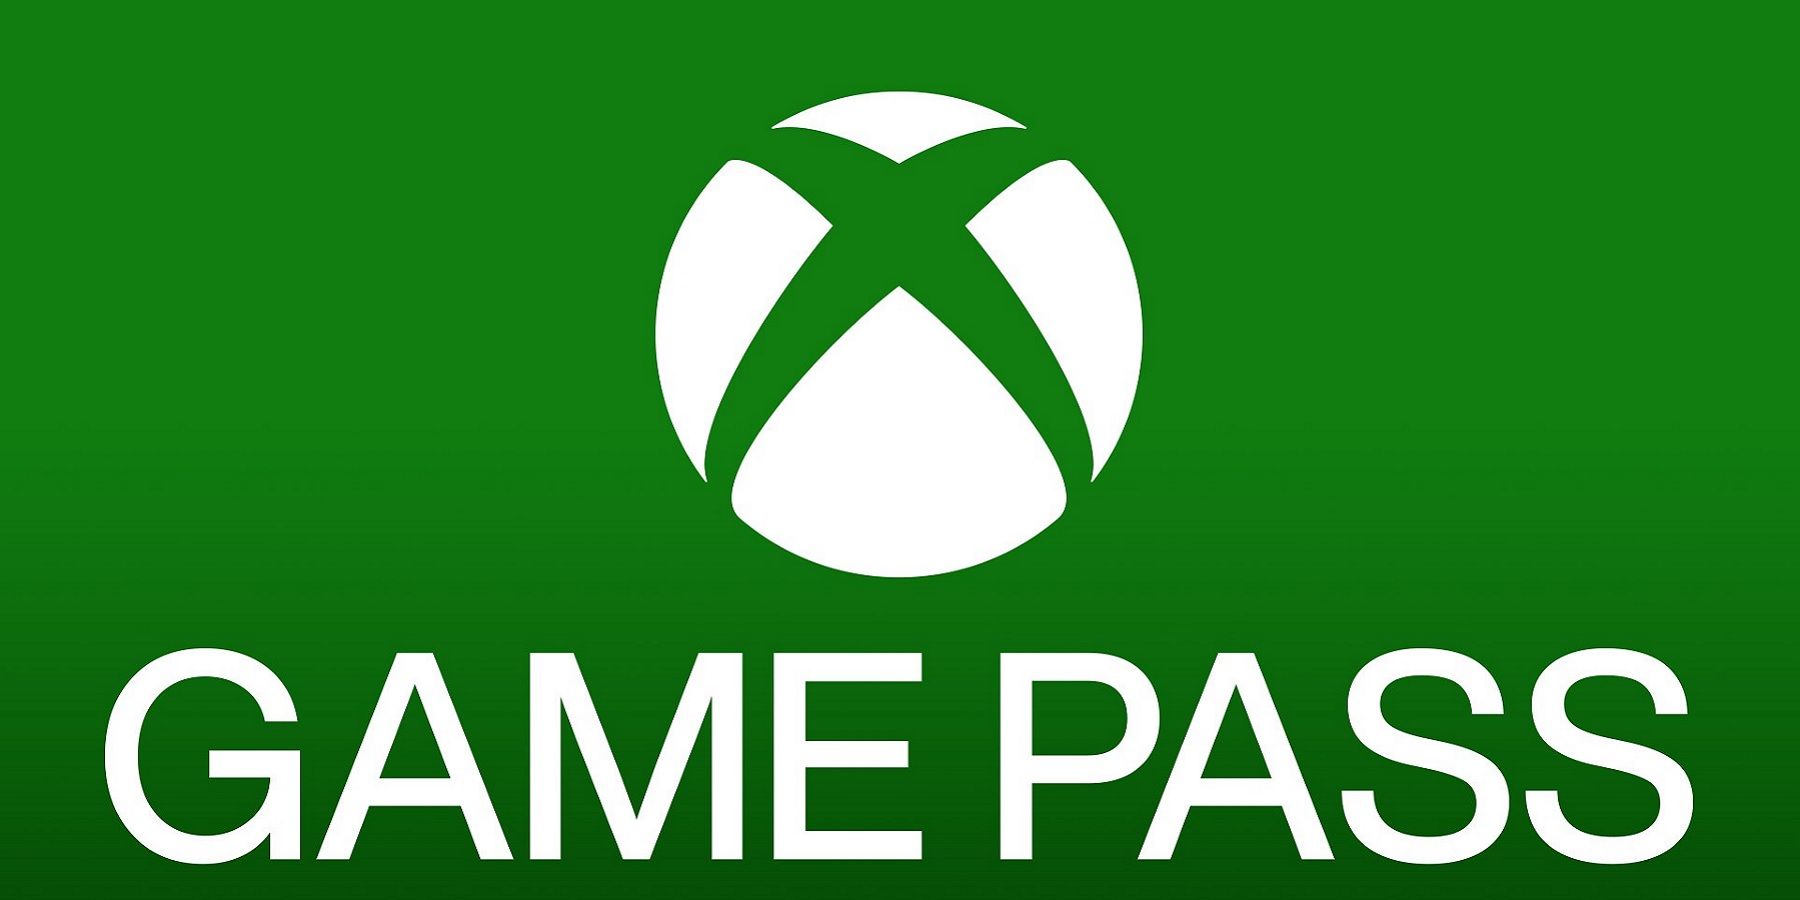 xbox game pass logo green background